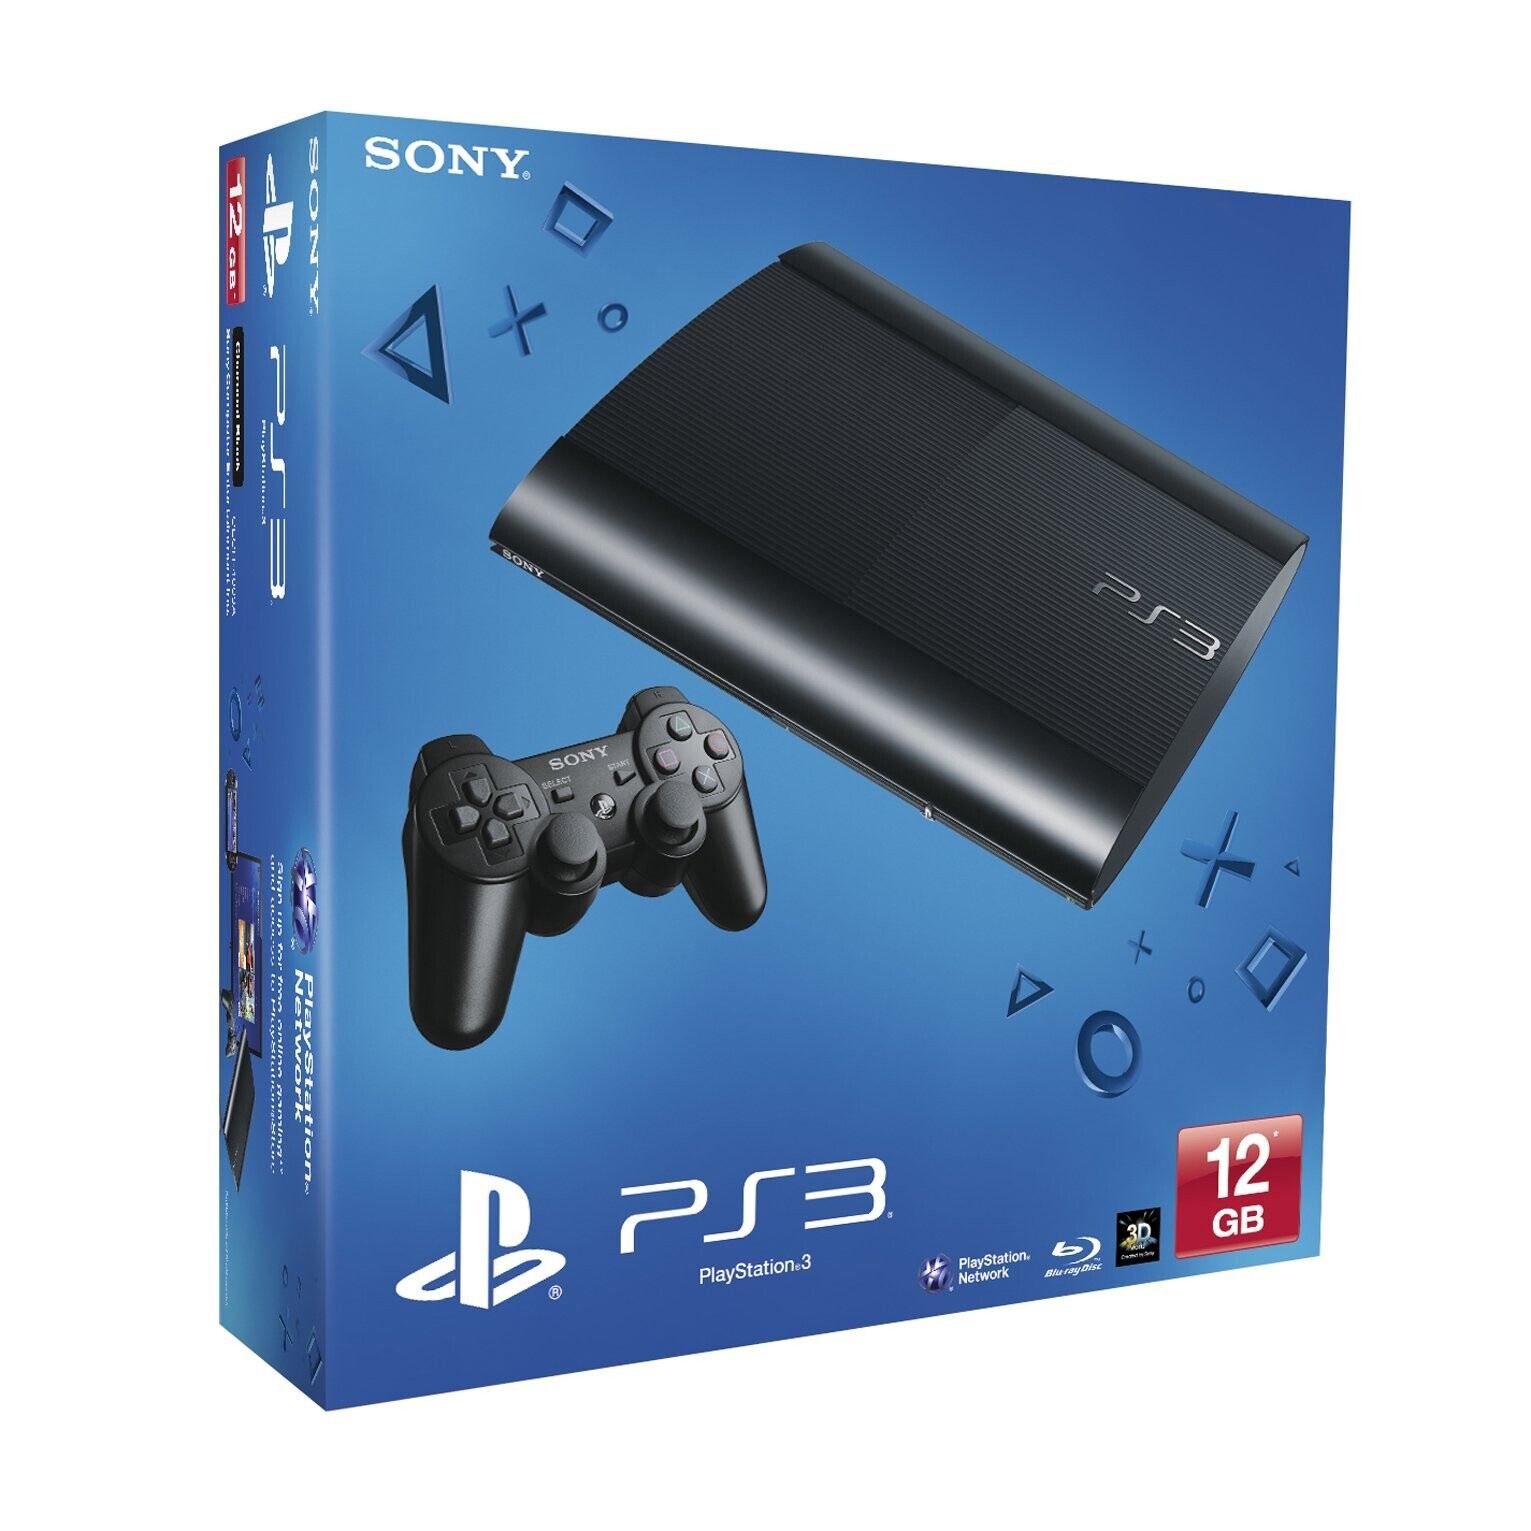  Sony PlayStation 3 super slim